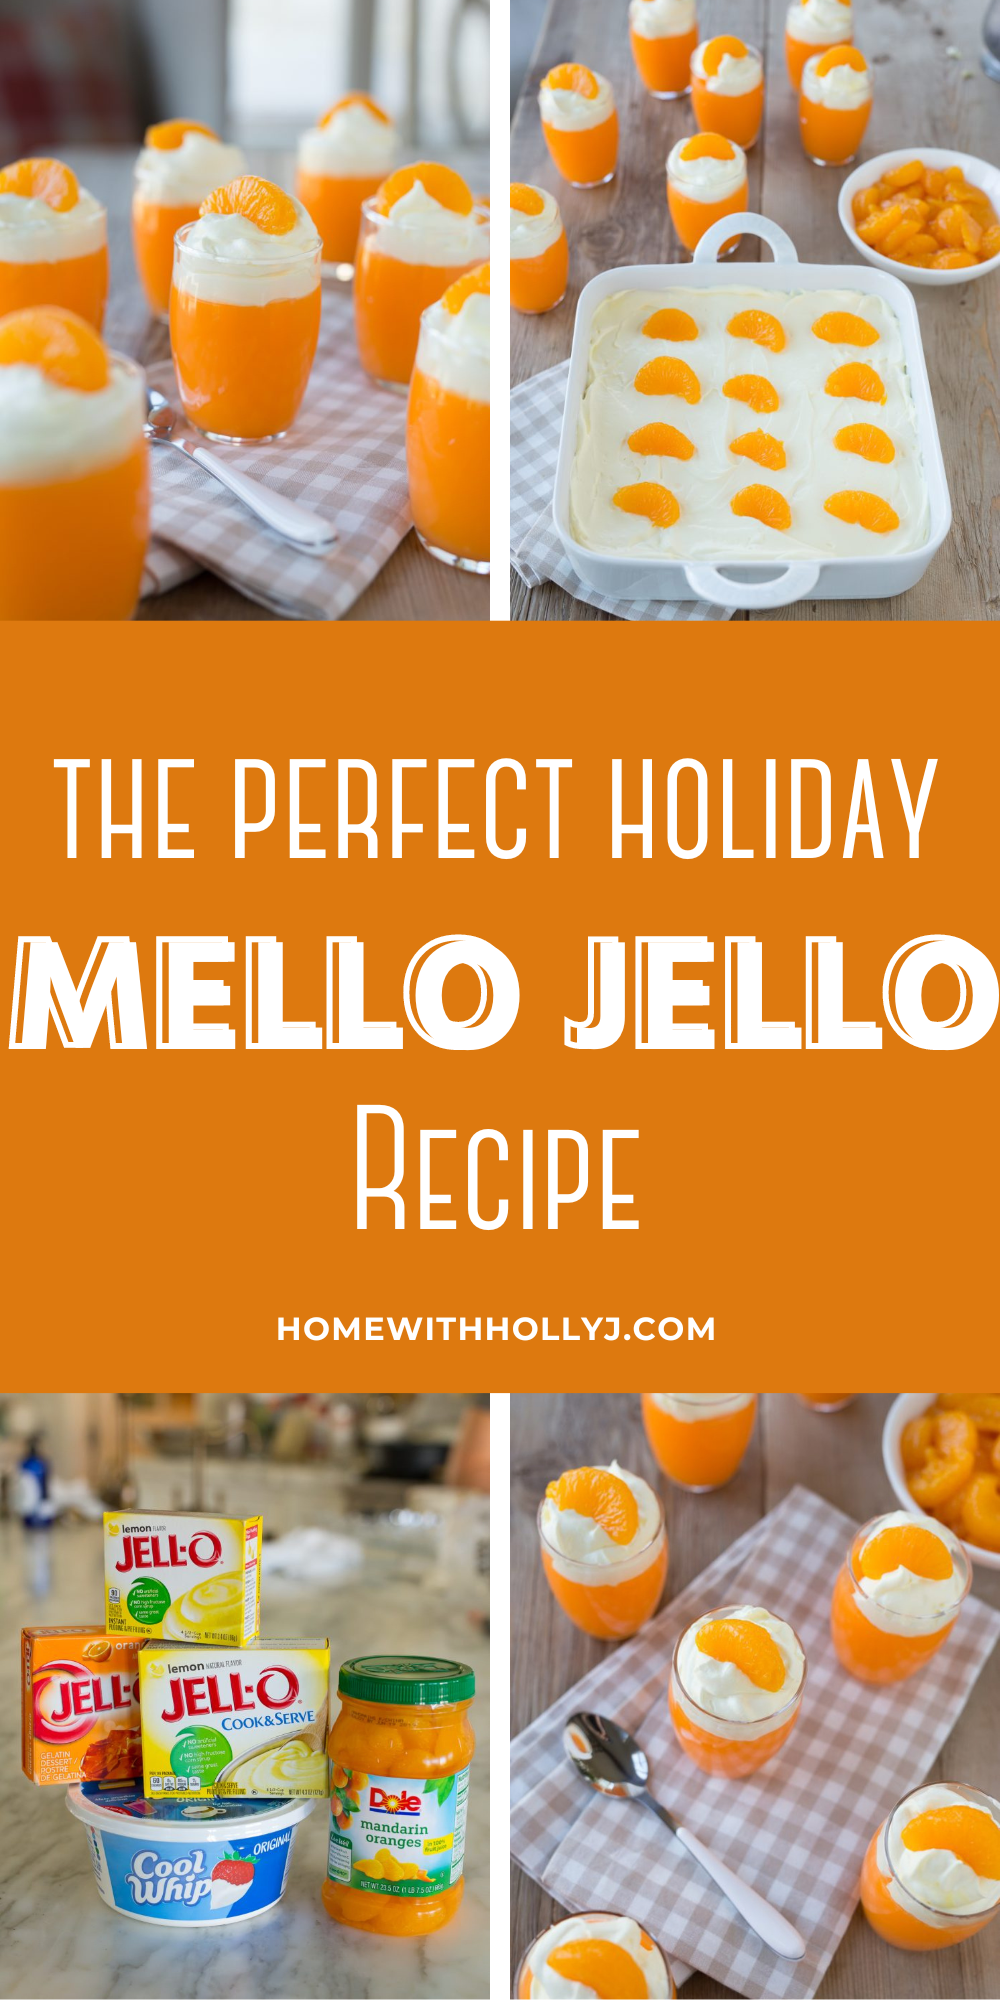 Sharing how to make this lemony Mello Jello holiday jello recipe for the whole family to enjoy! Perfect recipe for the holidays.